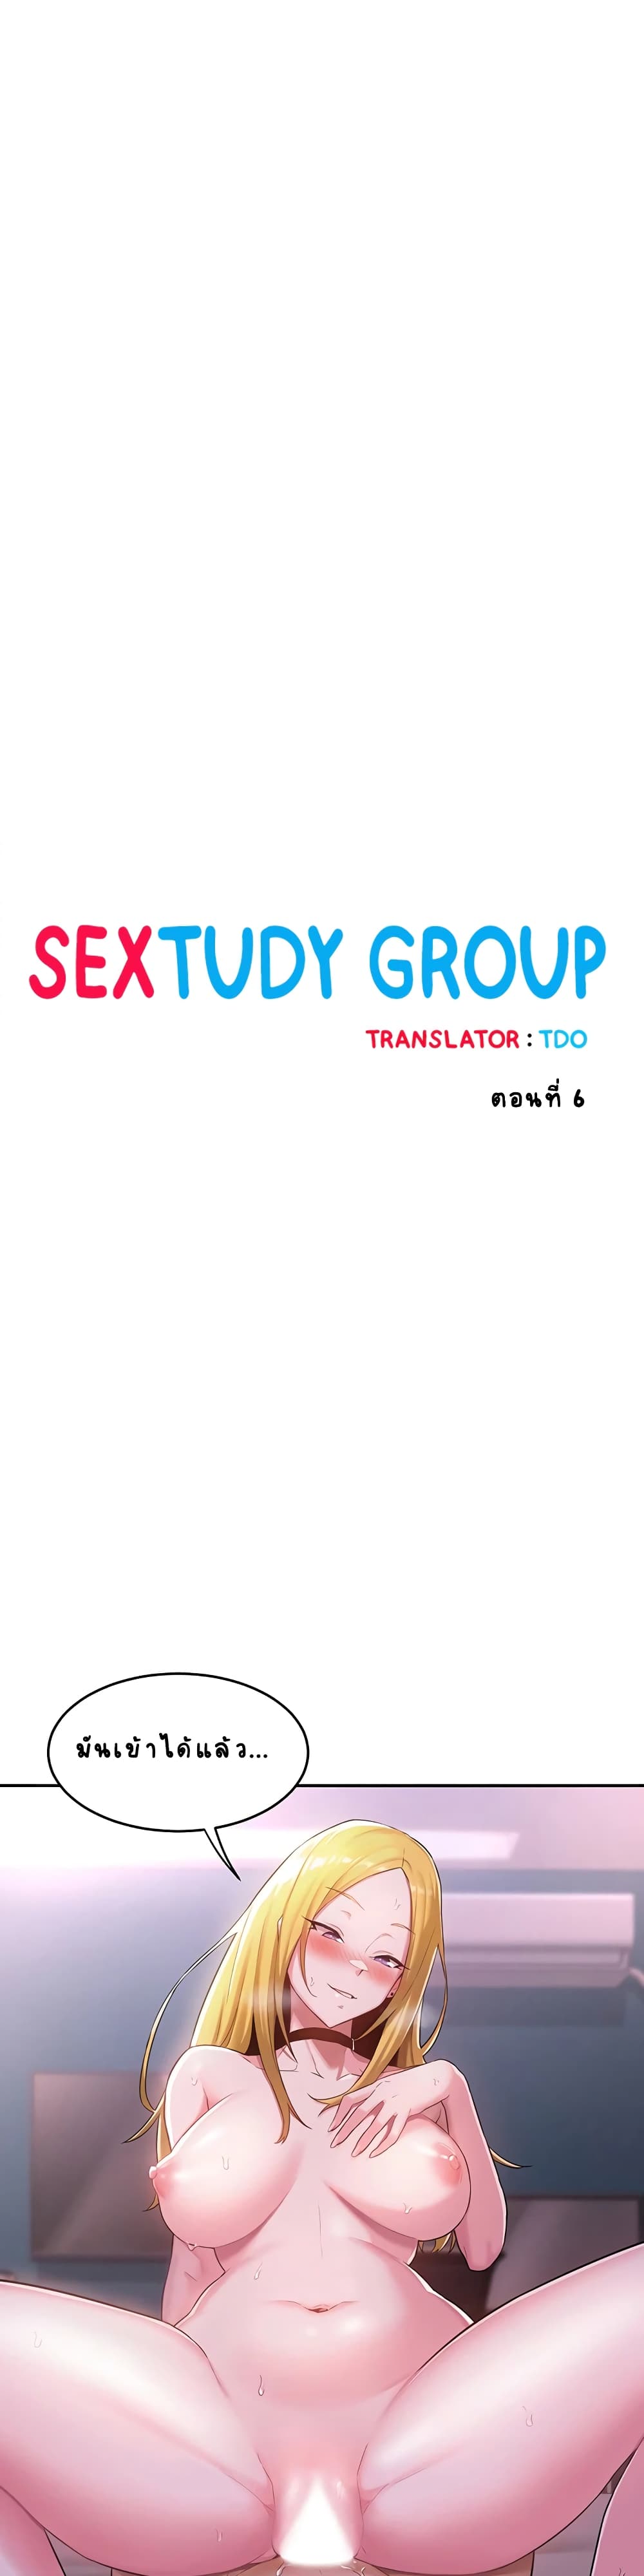 Sextudy Group 6 01